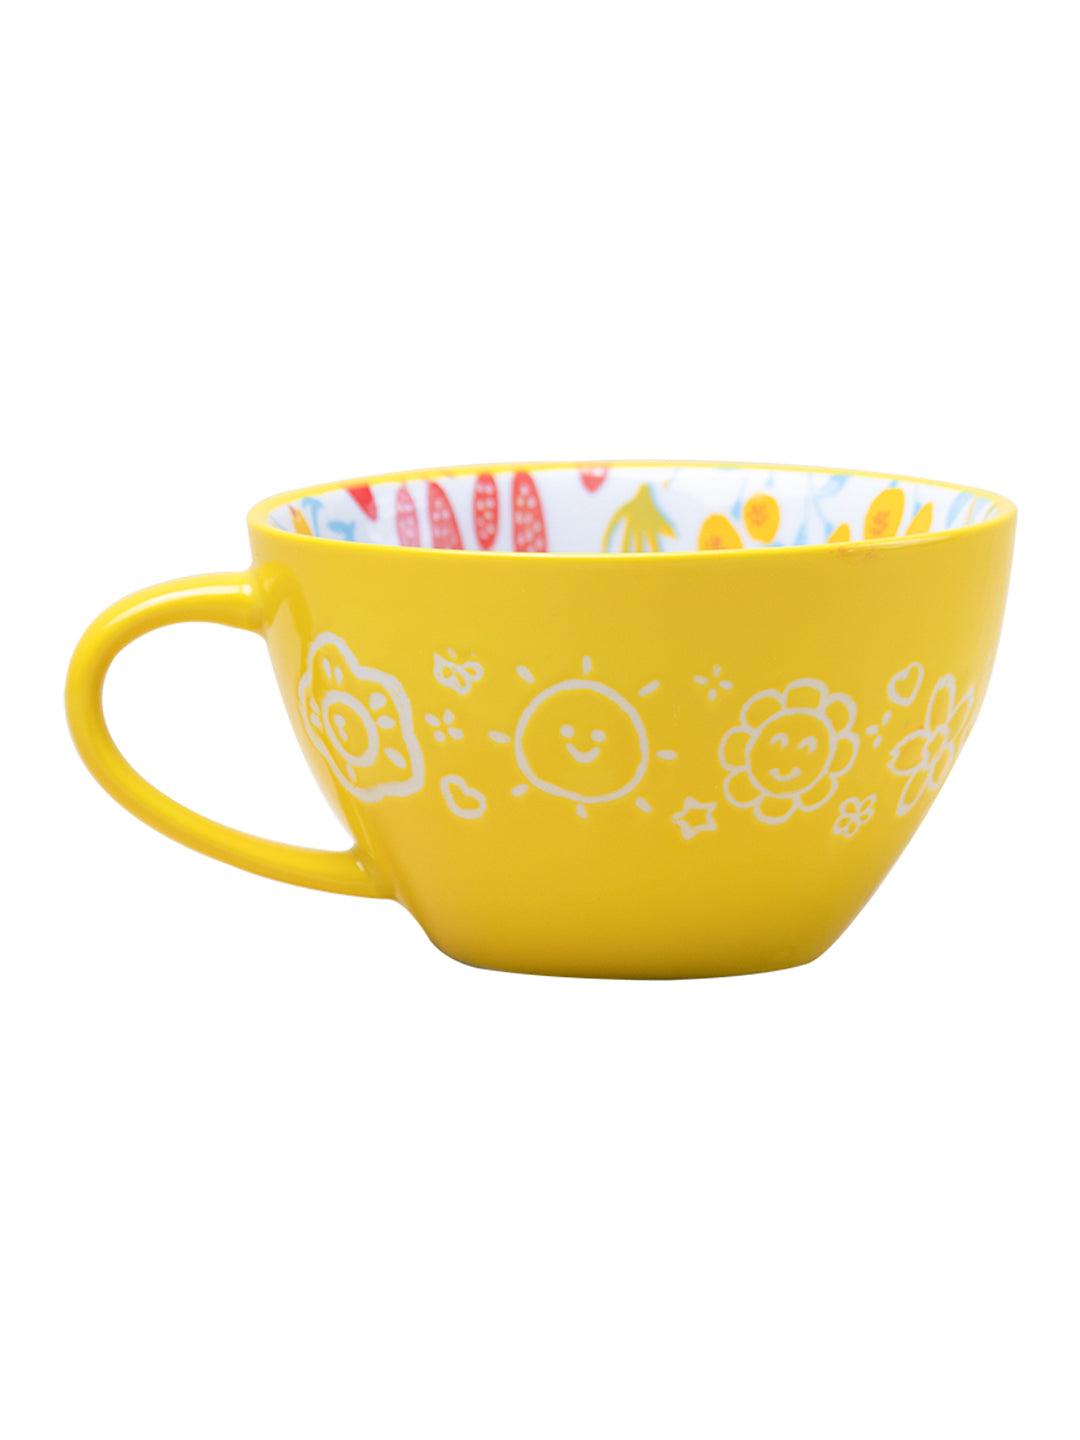 Stylish Ceramic Cup - Yellow, 400ml - 2